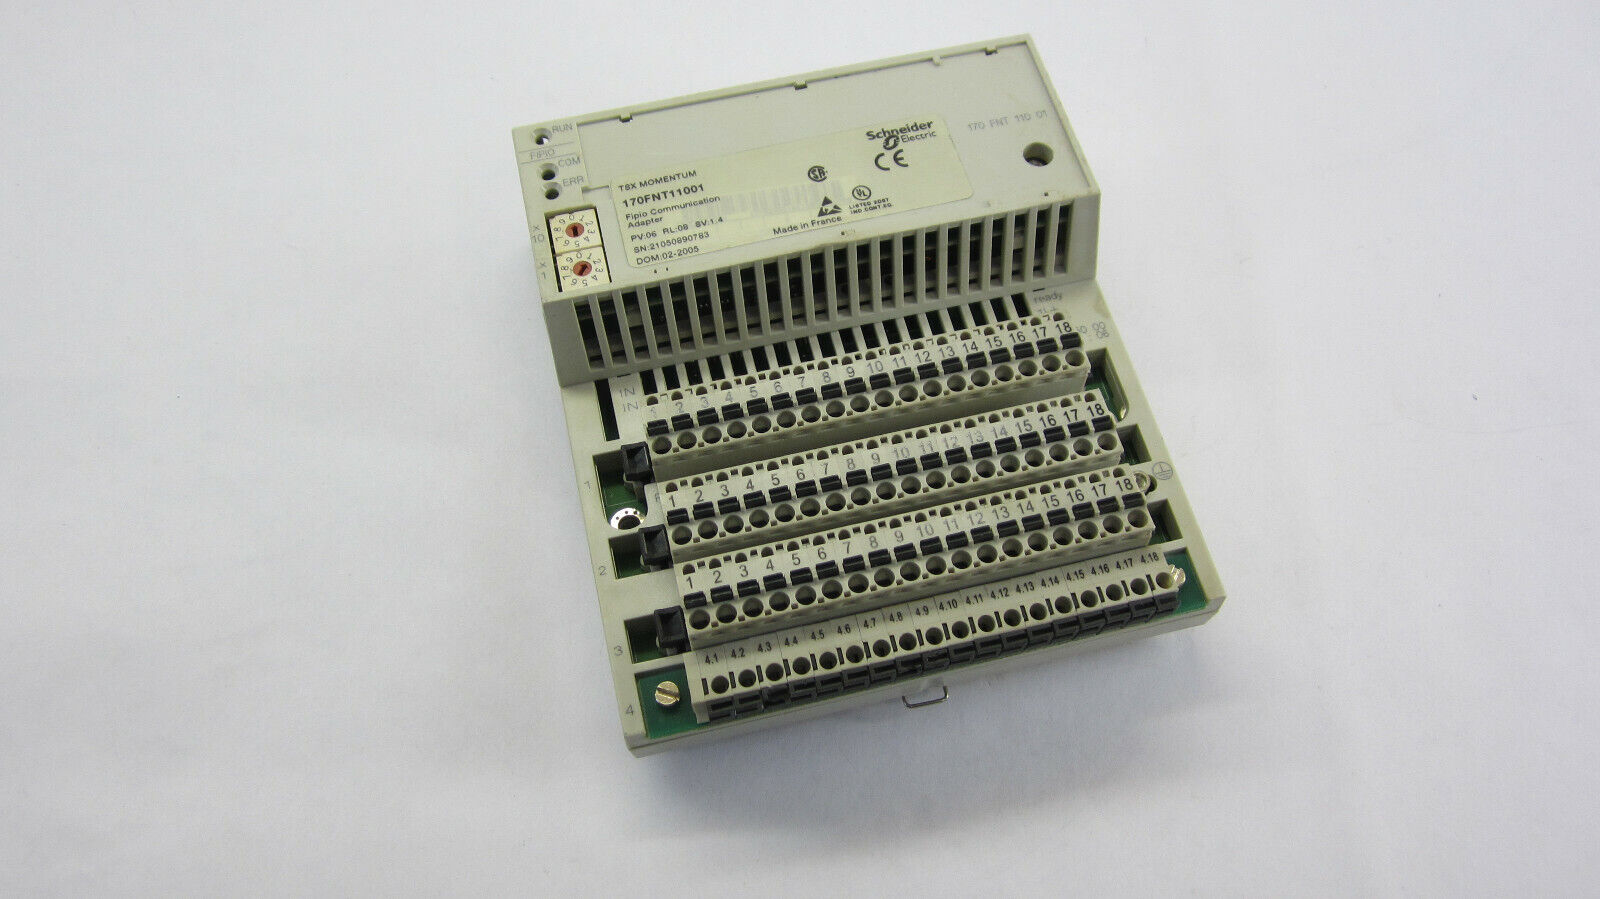 MODICON TSX MOMENTUM 170ADI35000 with 170FNT11001 Fipio communication adaptor